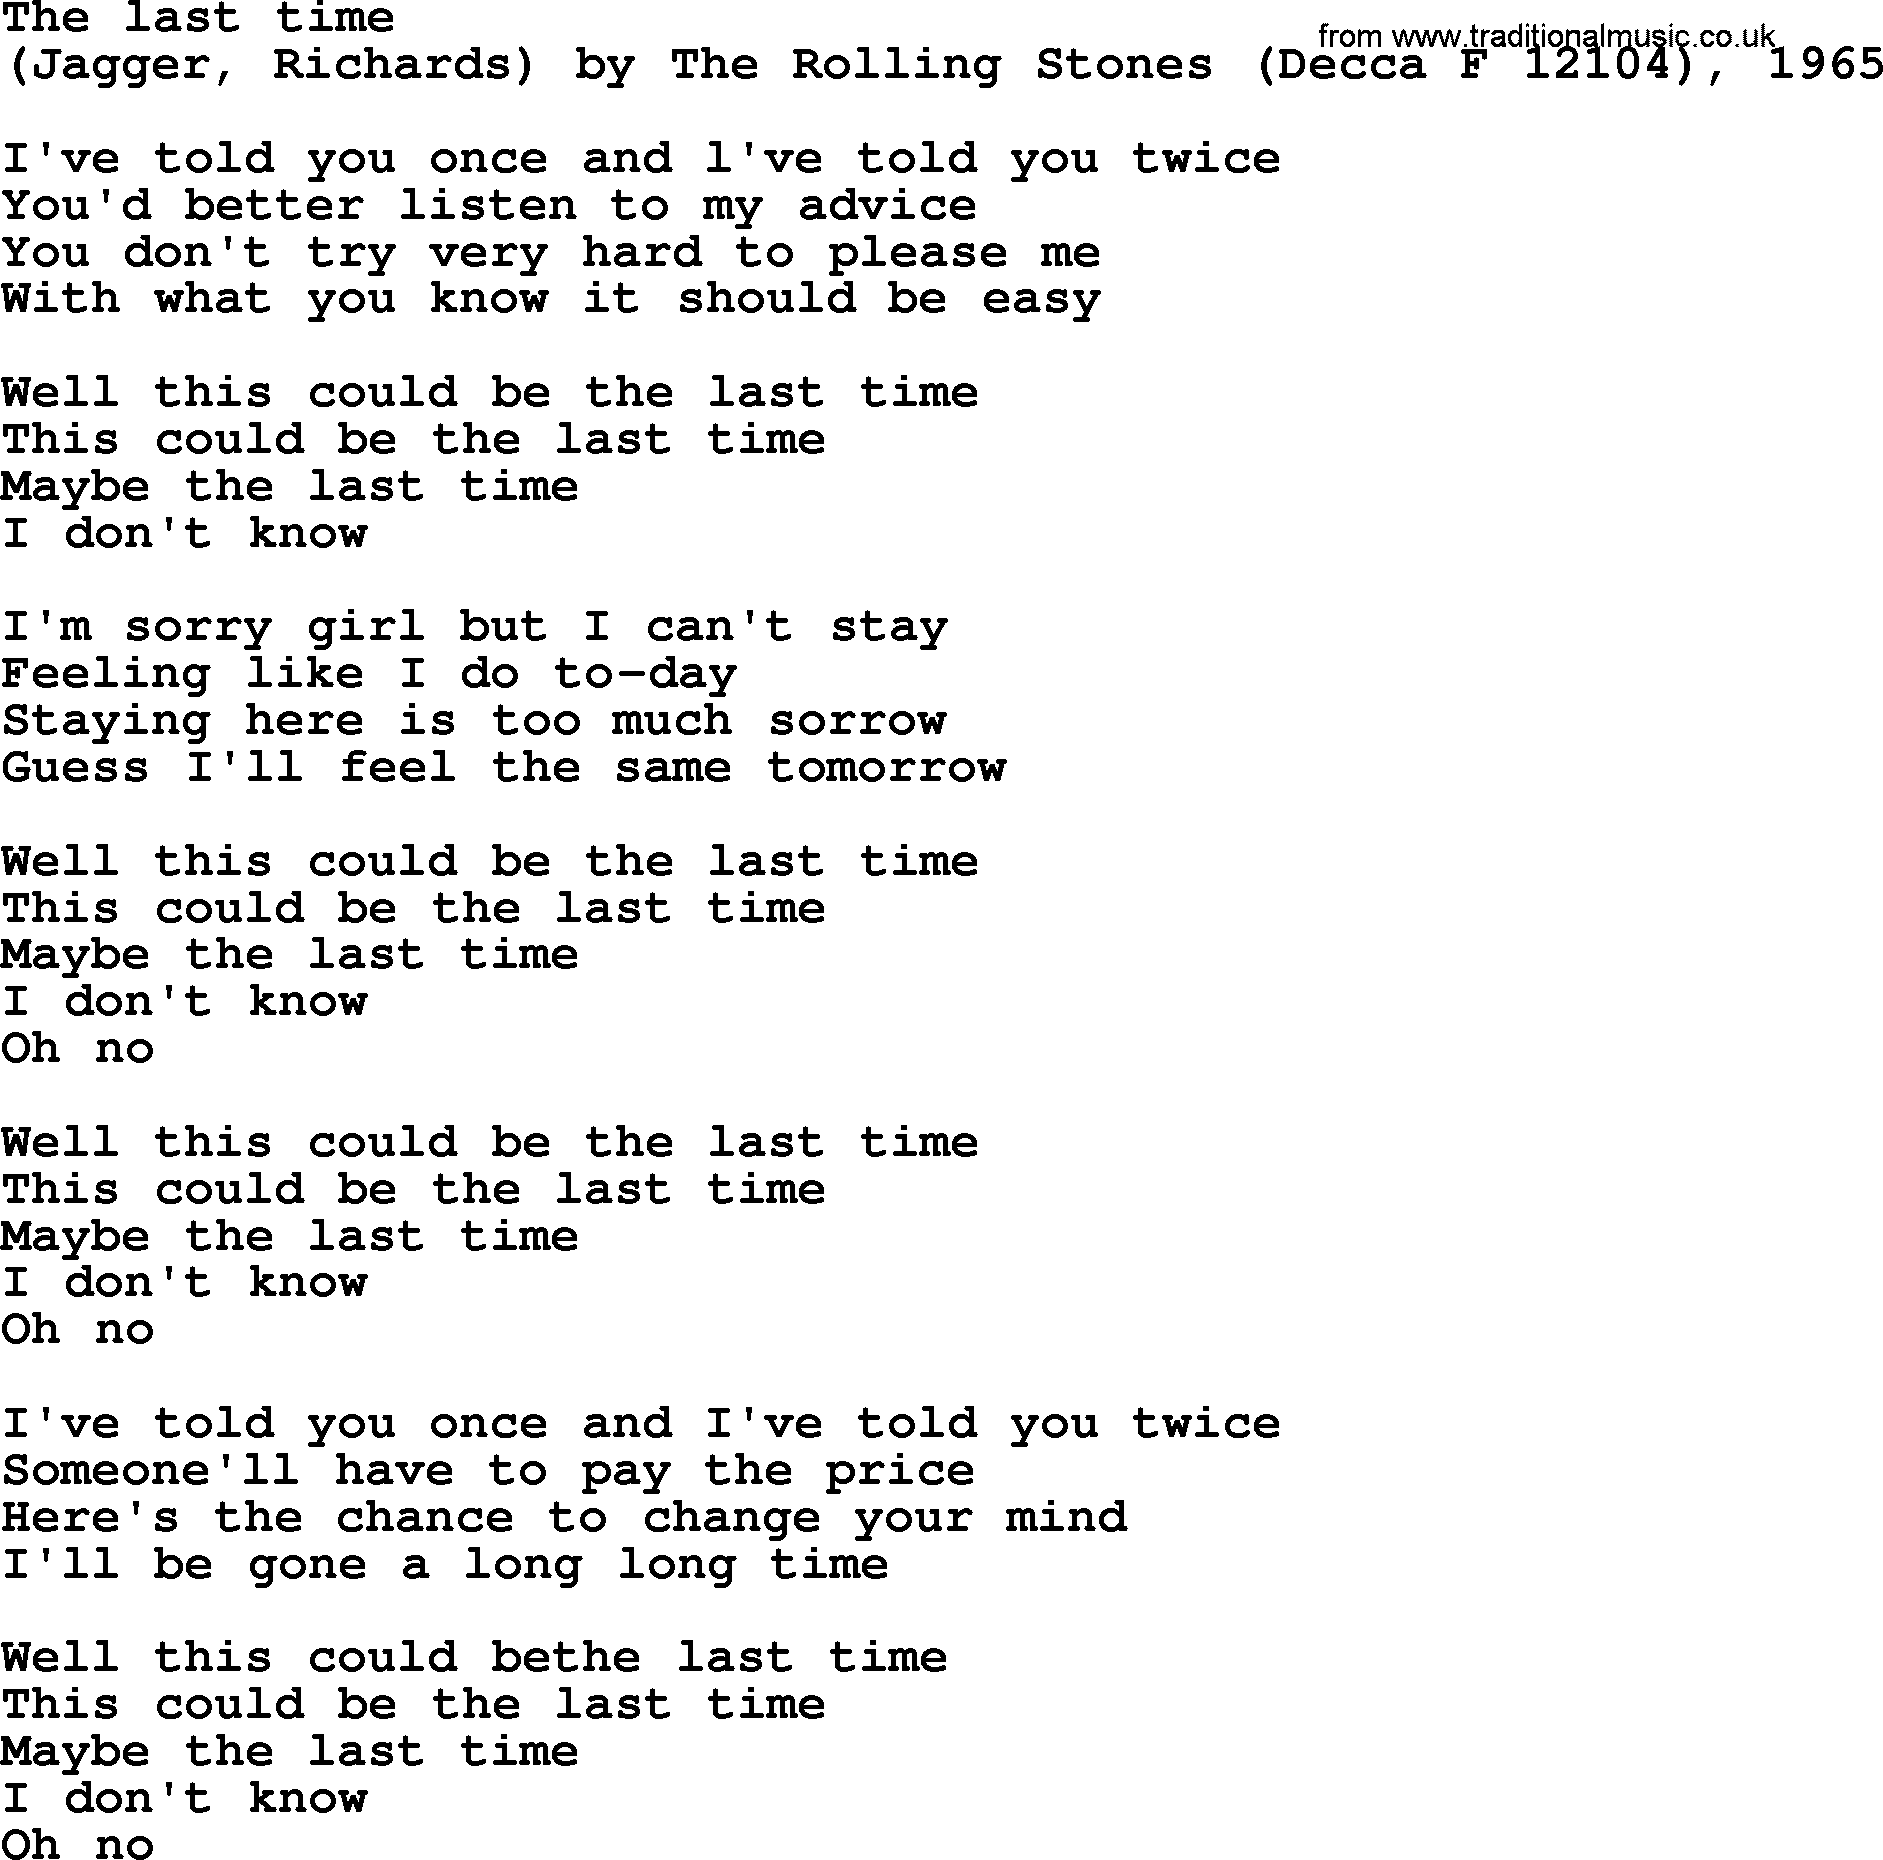 Bruce Springsteen song: The Last Time lyrics